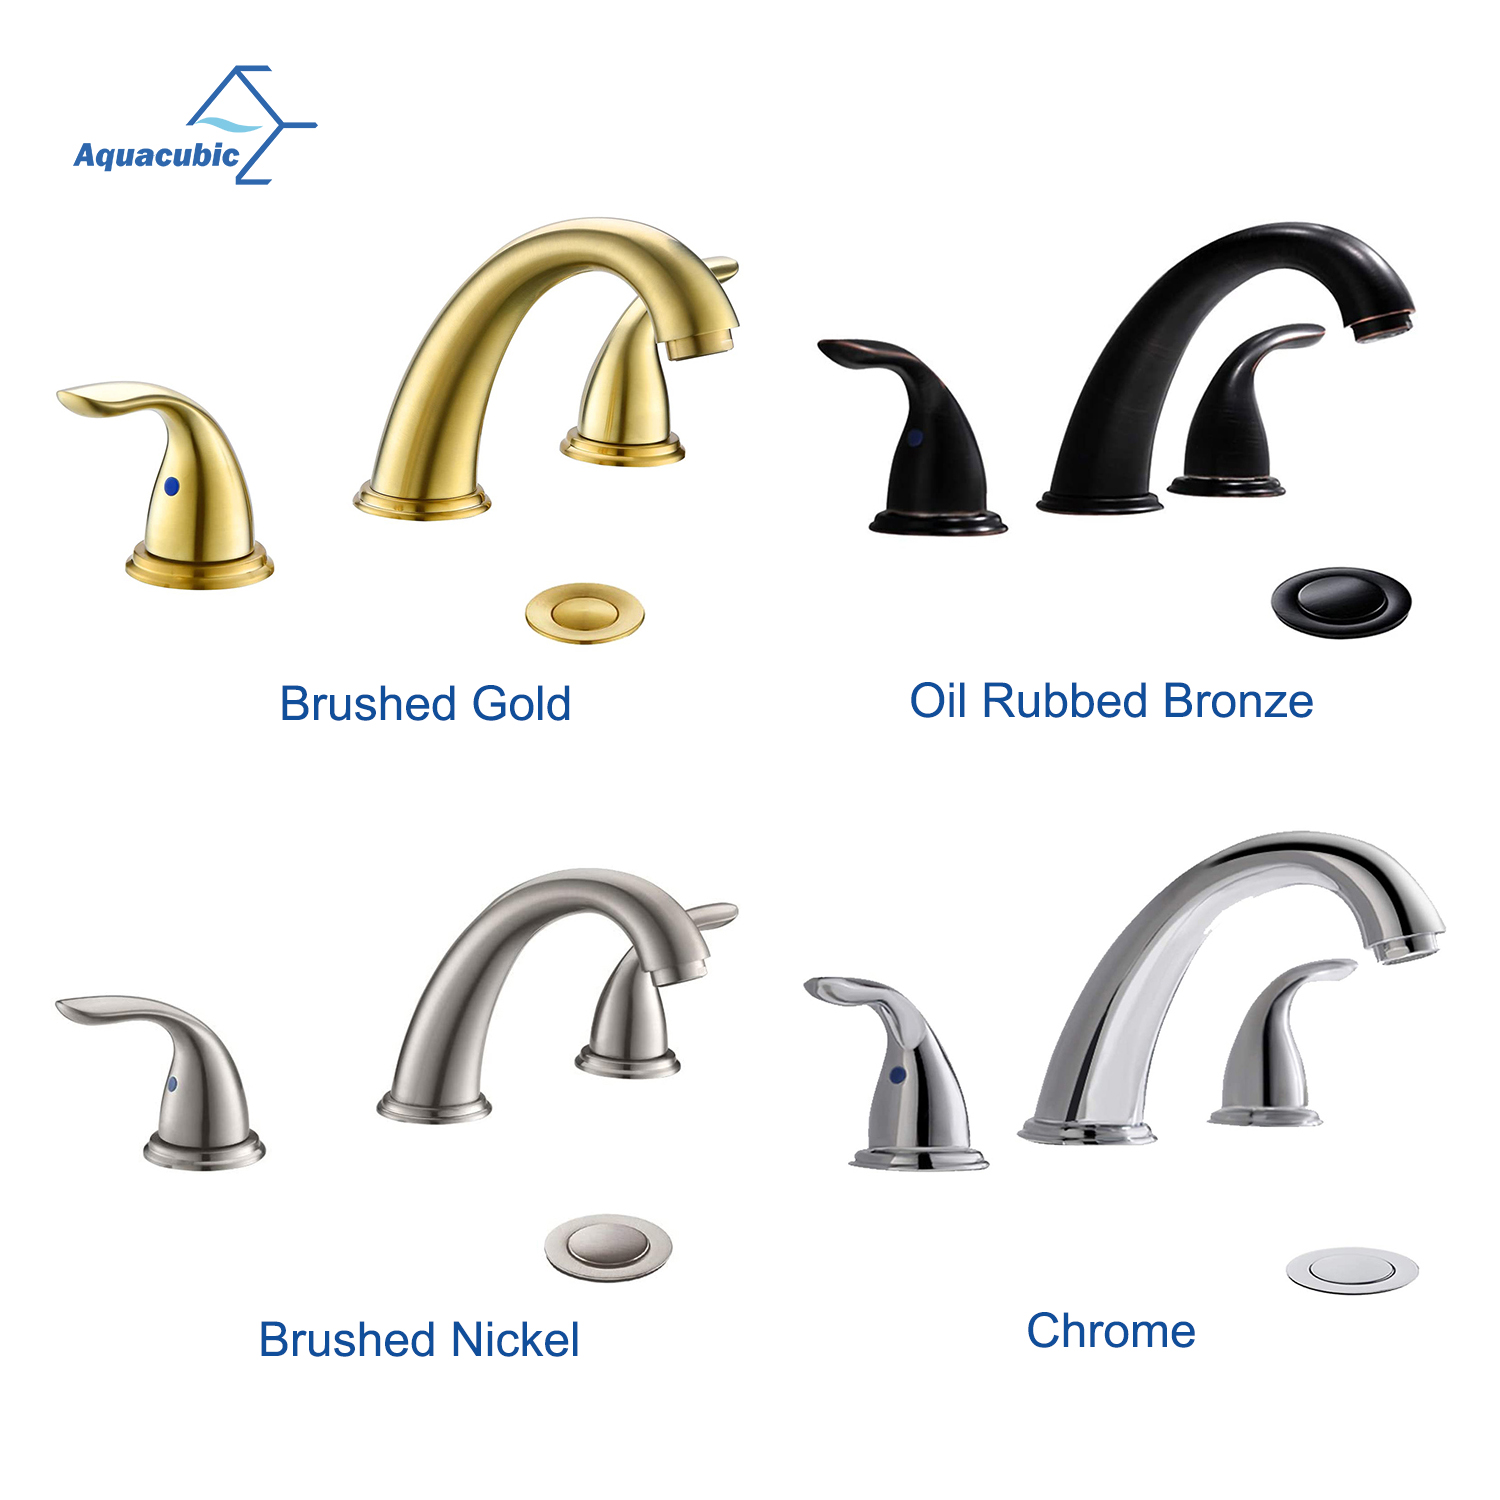 Aquacubic Brushed Nickel Deck Mount Widespread Brass Body Bathroom Basin Faucet